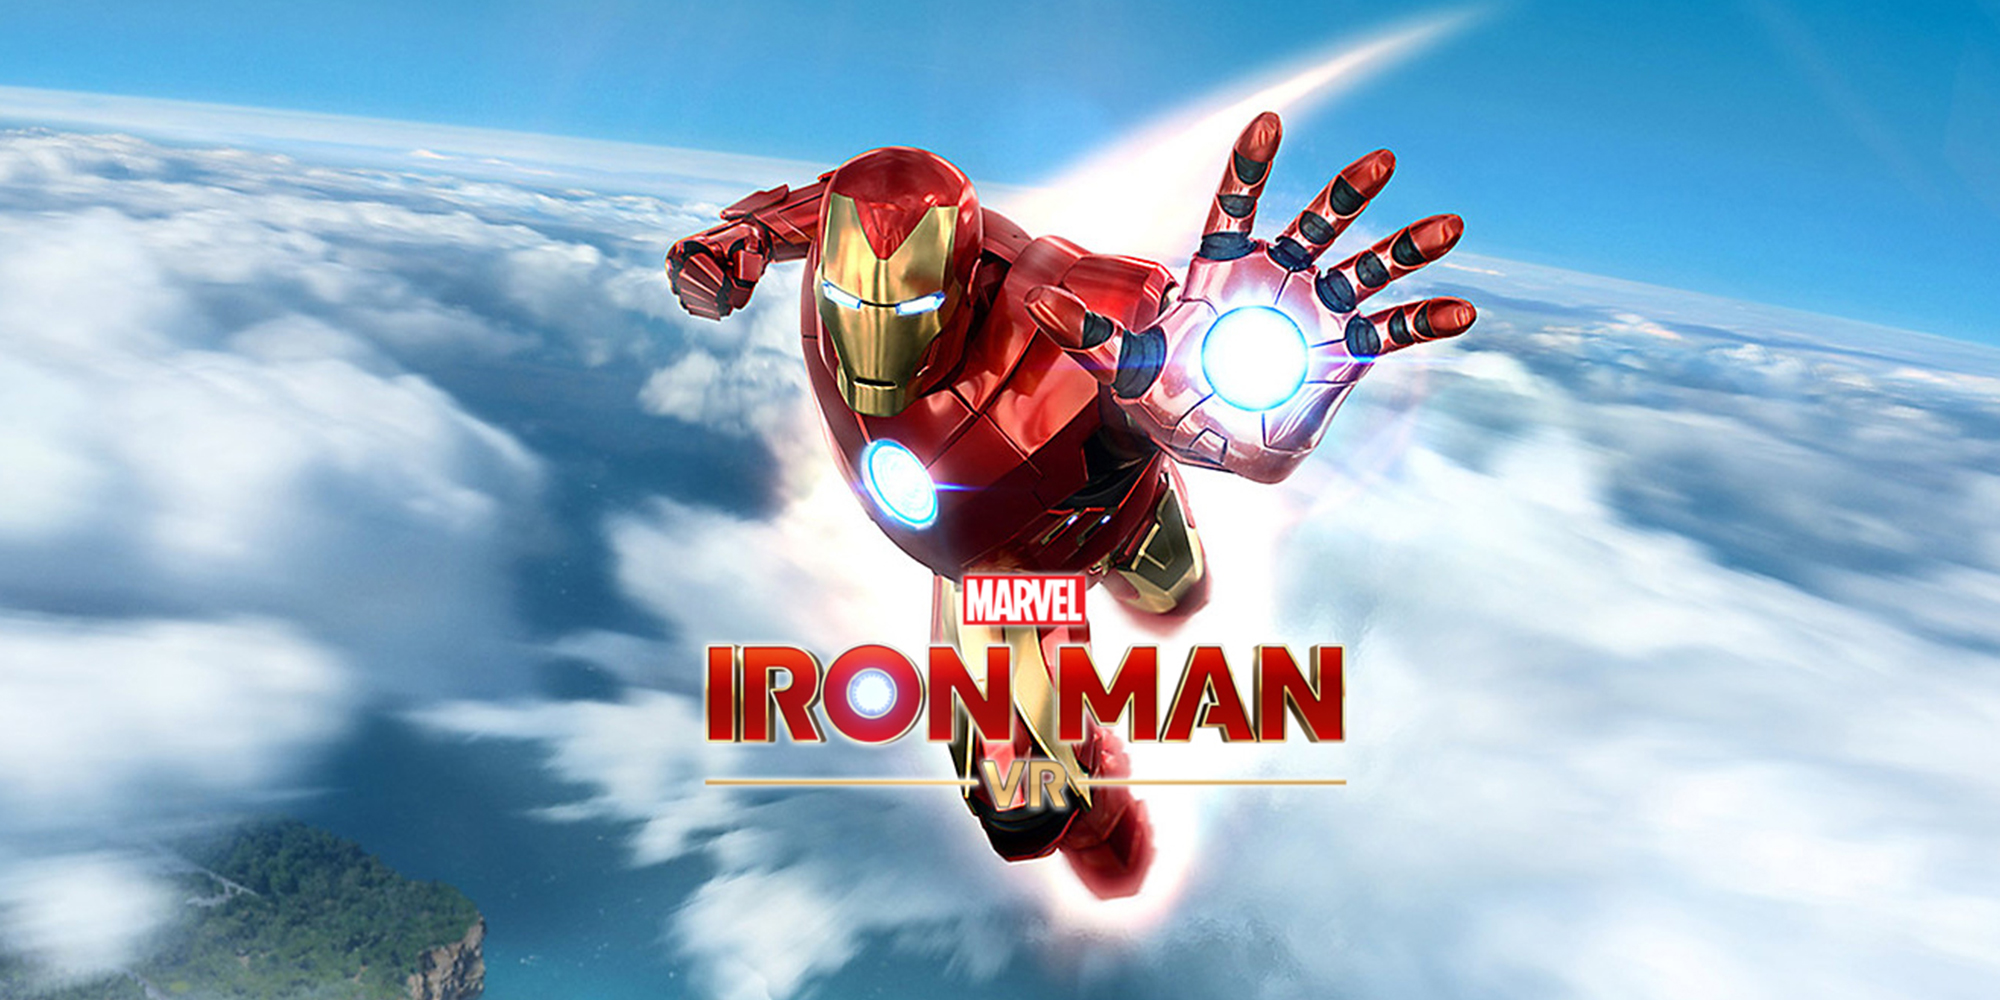  Marvel’s Iron Man VR